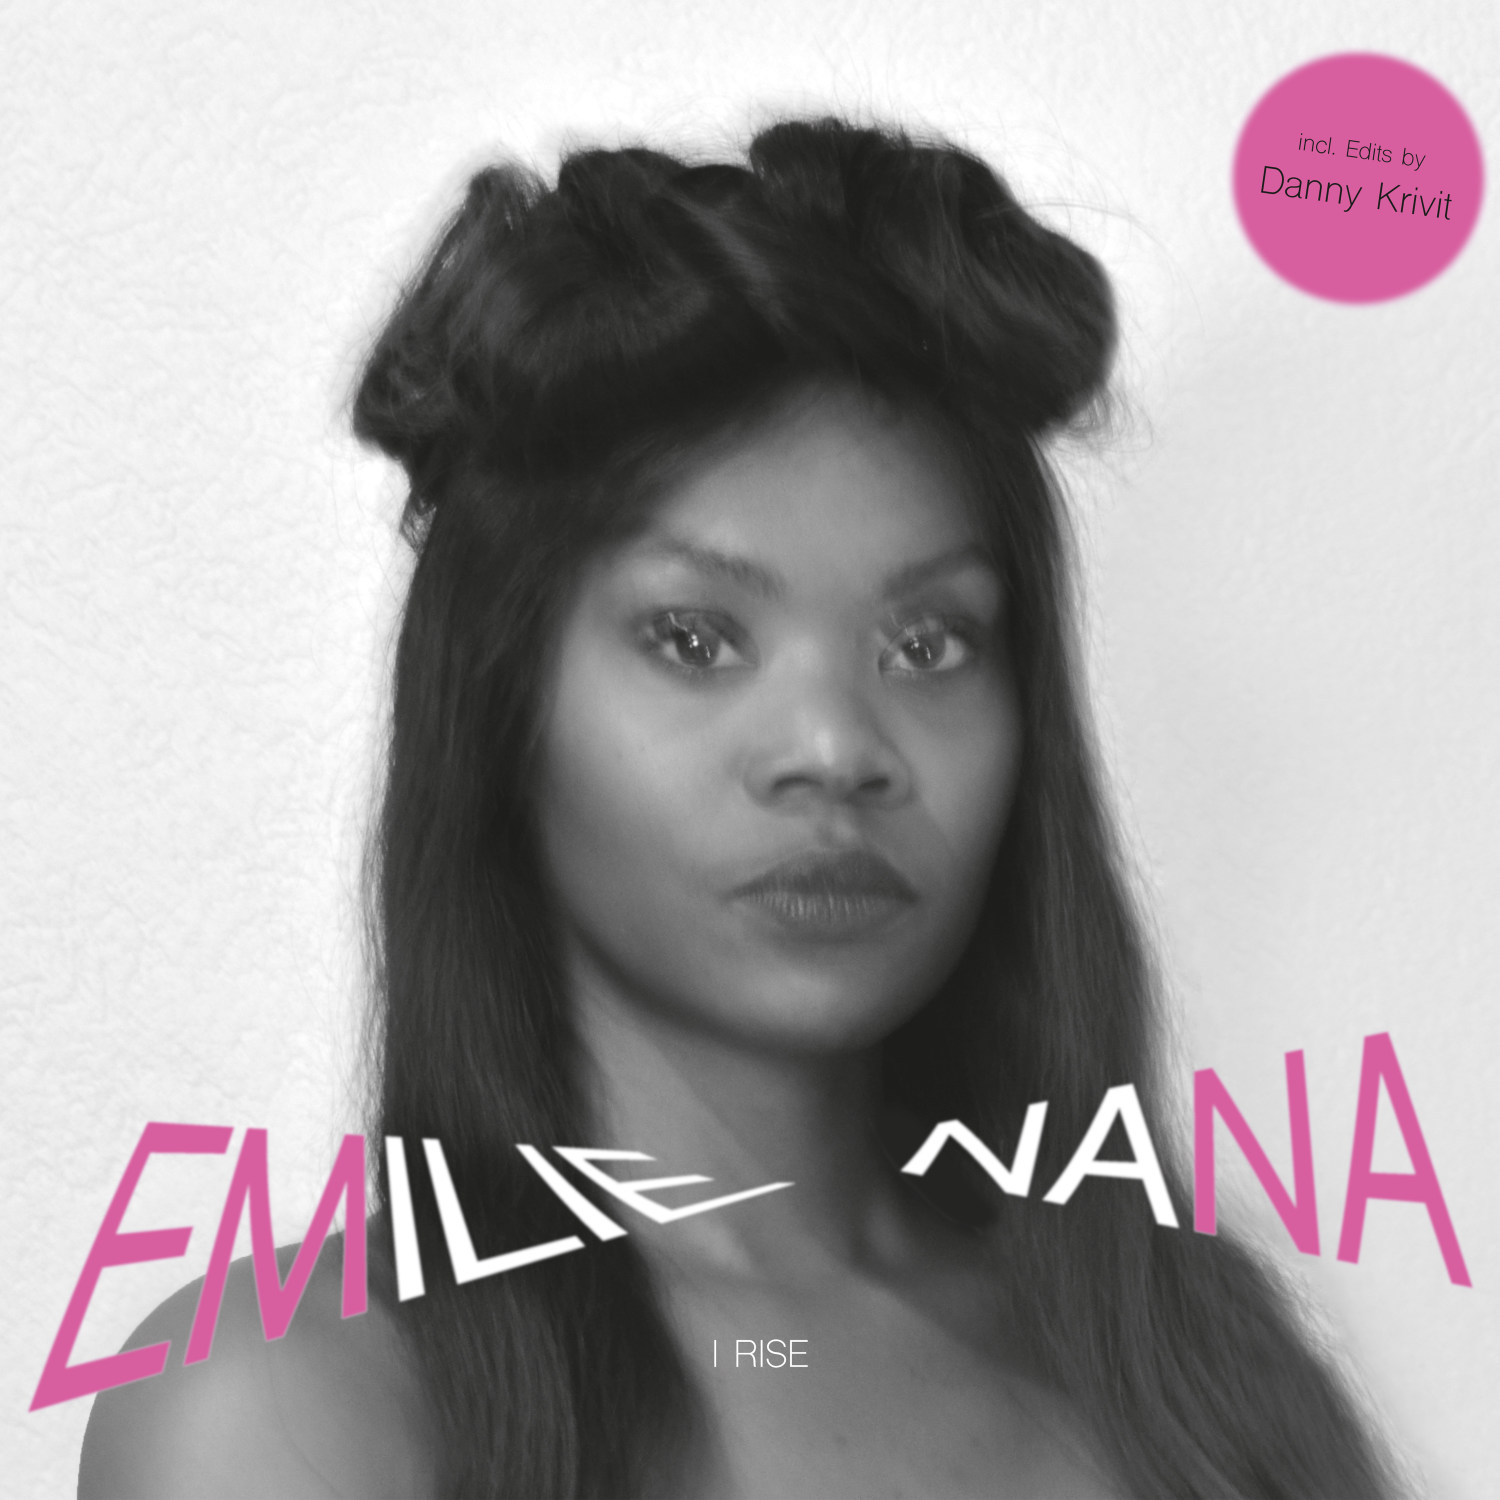 EMILIE NANA / I RISE EP (DANNY KRIVIT EDITS)